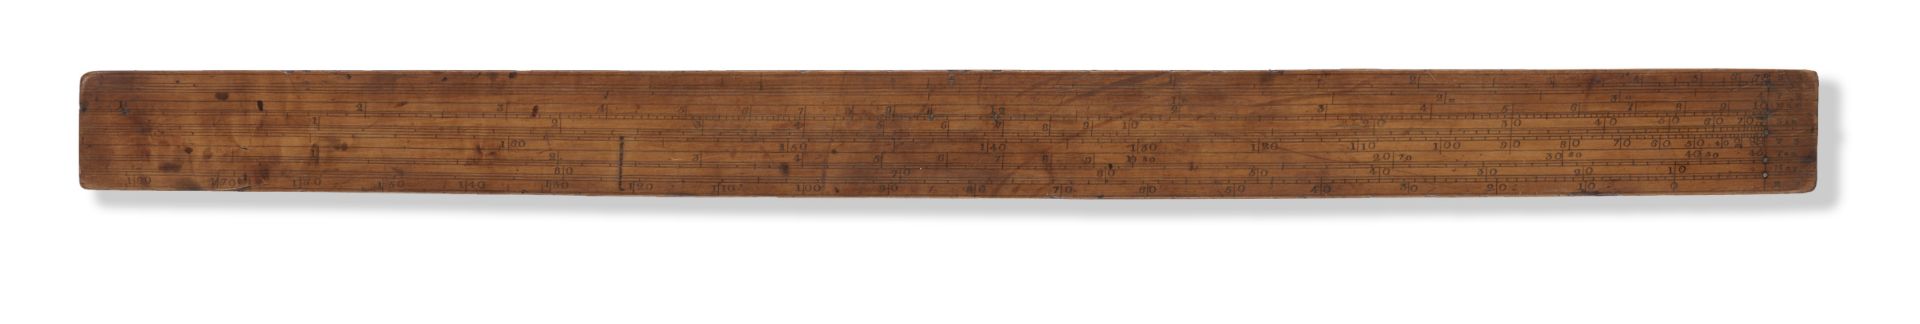 A boxwood Gunter rule, English, 18th century,